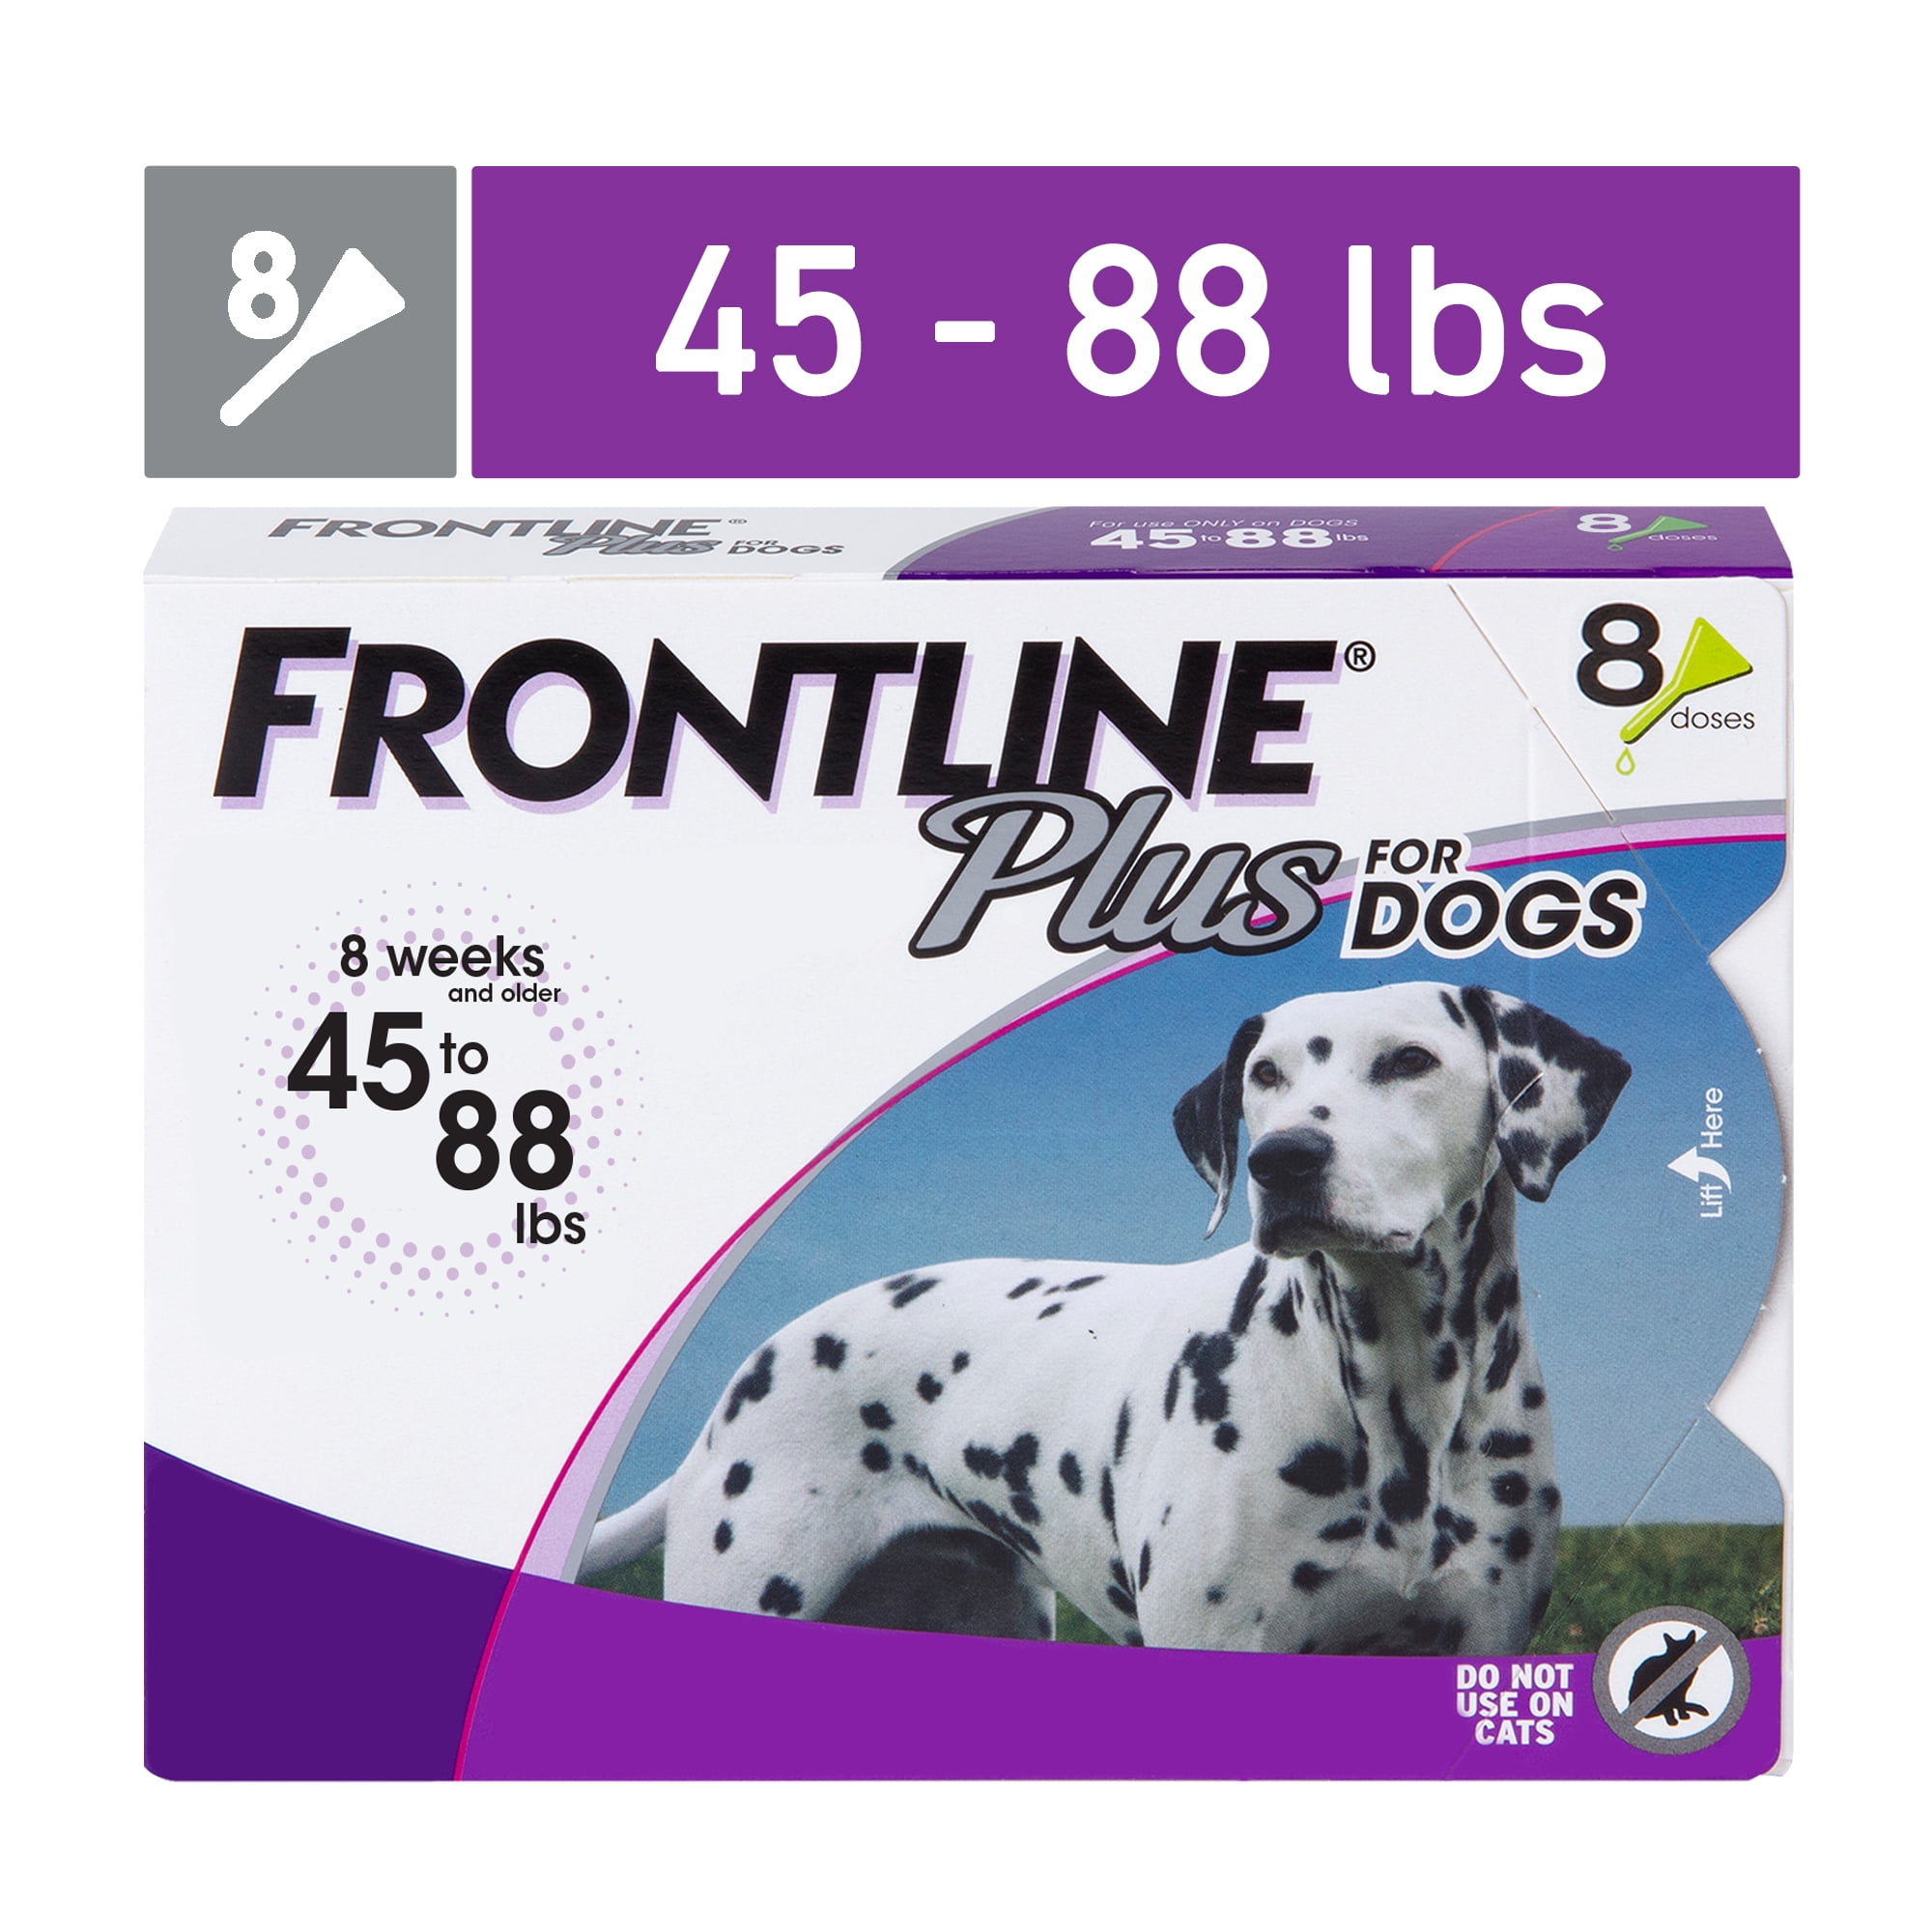 FRONTLINE® Plus for Dogs Flea and Tick Treatment, Large Dog, 45-88 lb,  Purple Box, 3 CT - Walmart.com